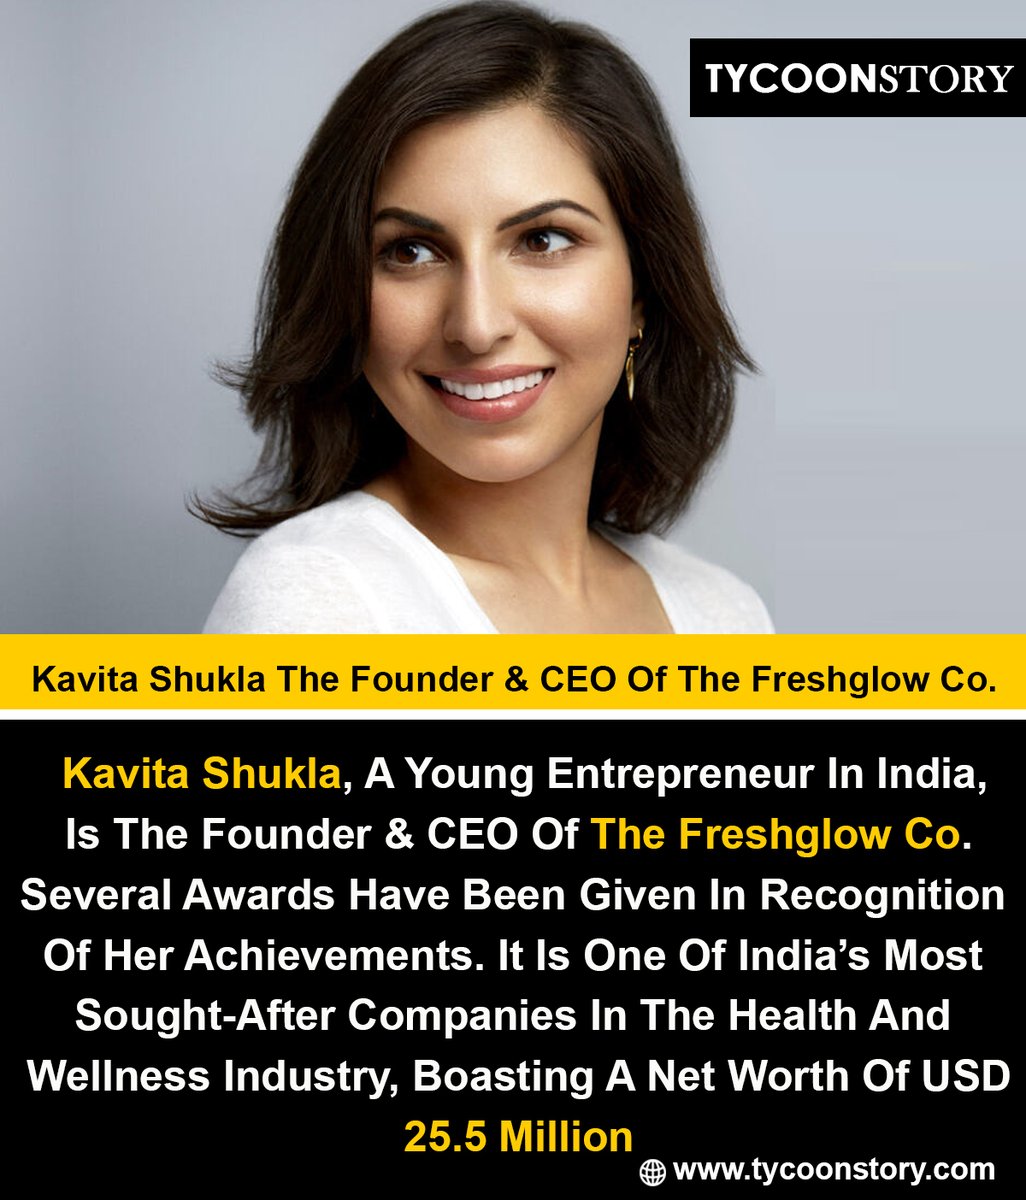 Kavita Shukla The Founder & CEO Of The Freshglow Co.

#KavitaShukla #FreshglowCo #FoodSafety #InnovationLeader #FoodWaste #Entrepreneurship #Sustainability #HealthAndWellness
#BiodegradablePackaging #NaturalProducts #StartupFounder 

tycoonstory.com